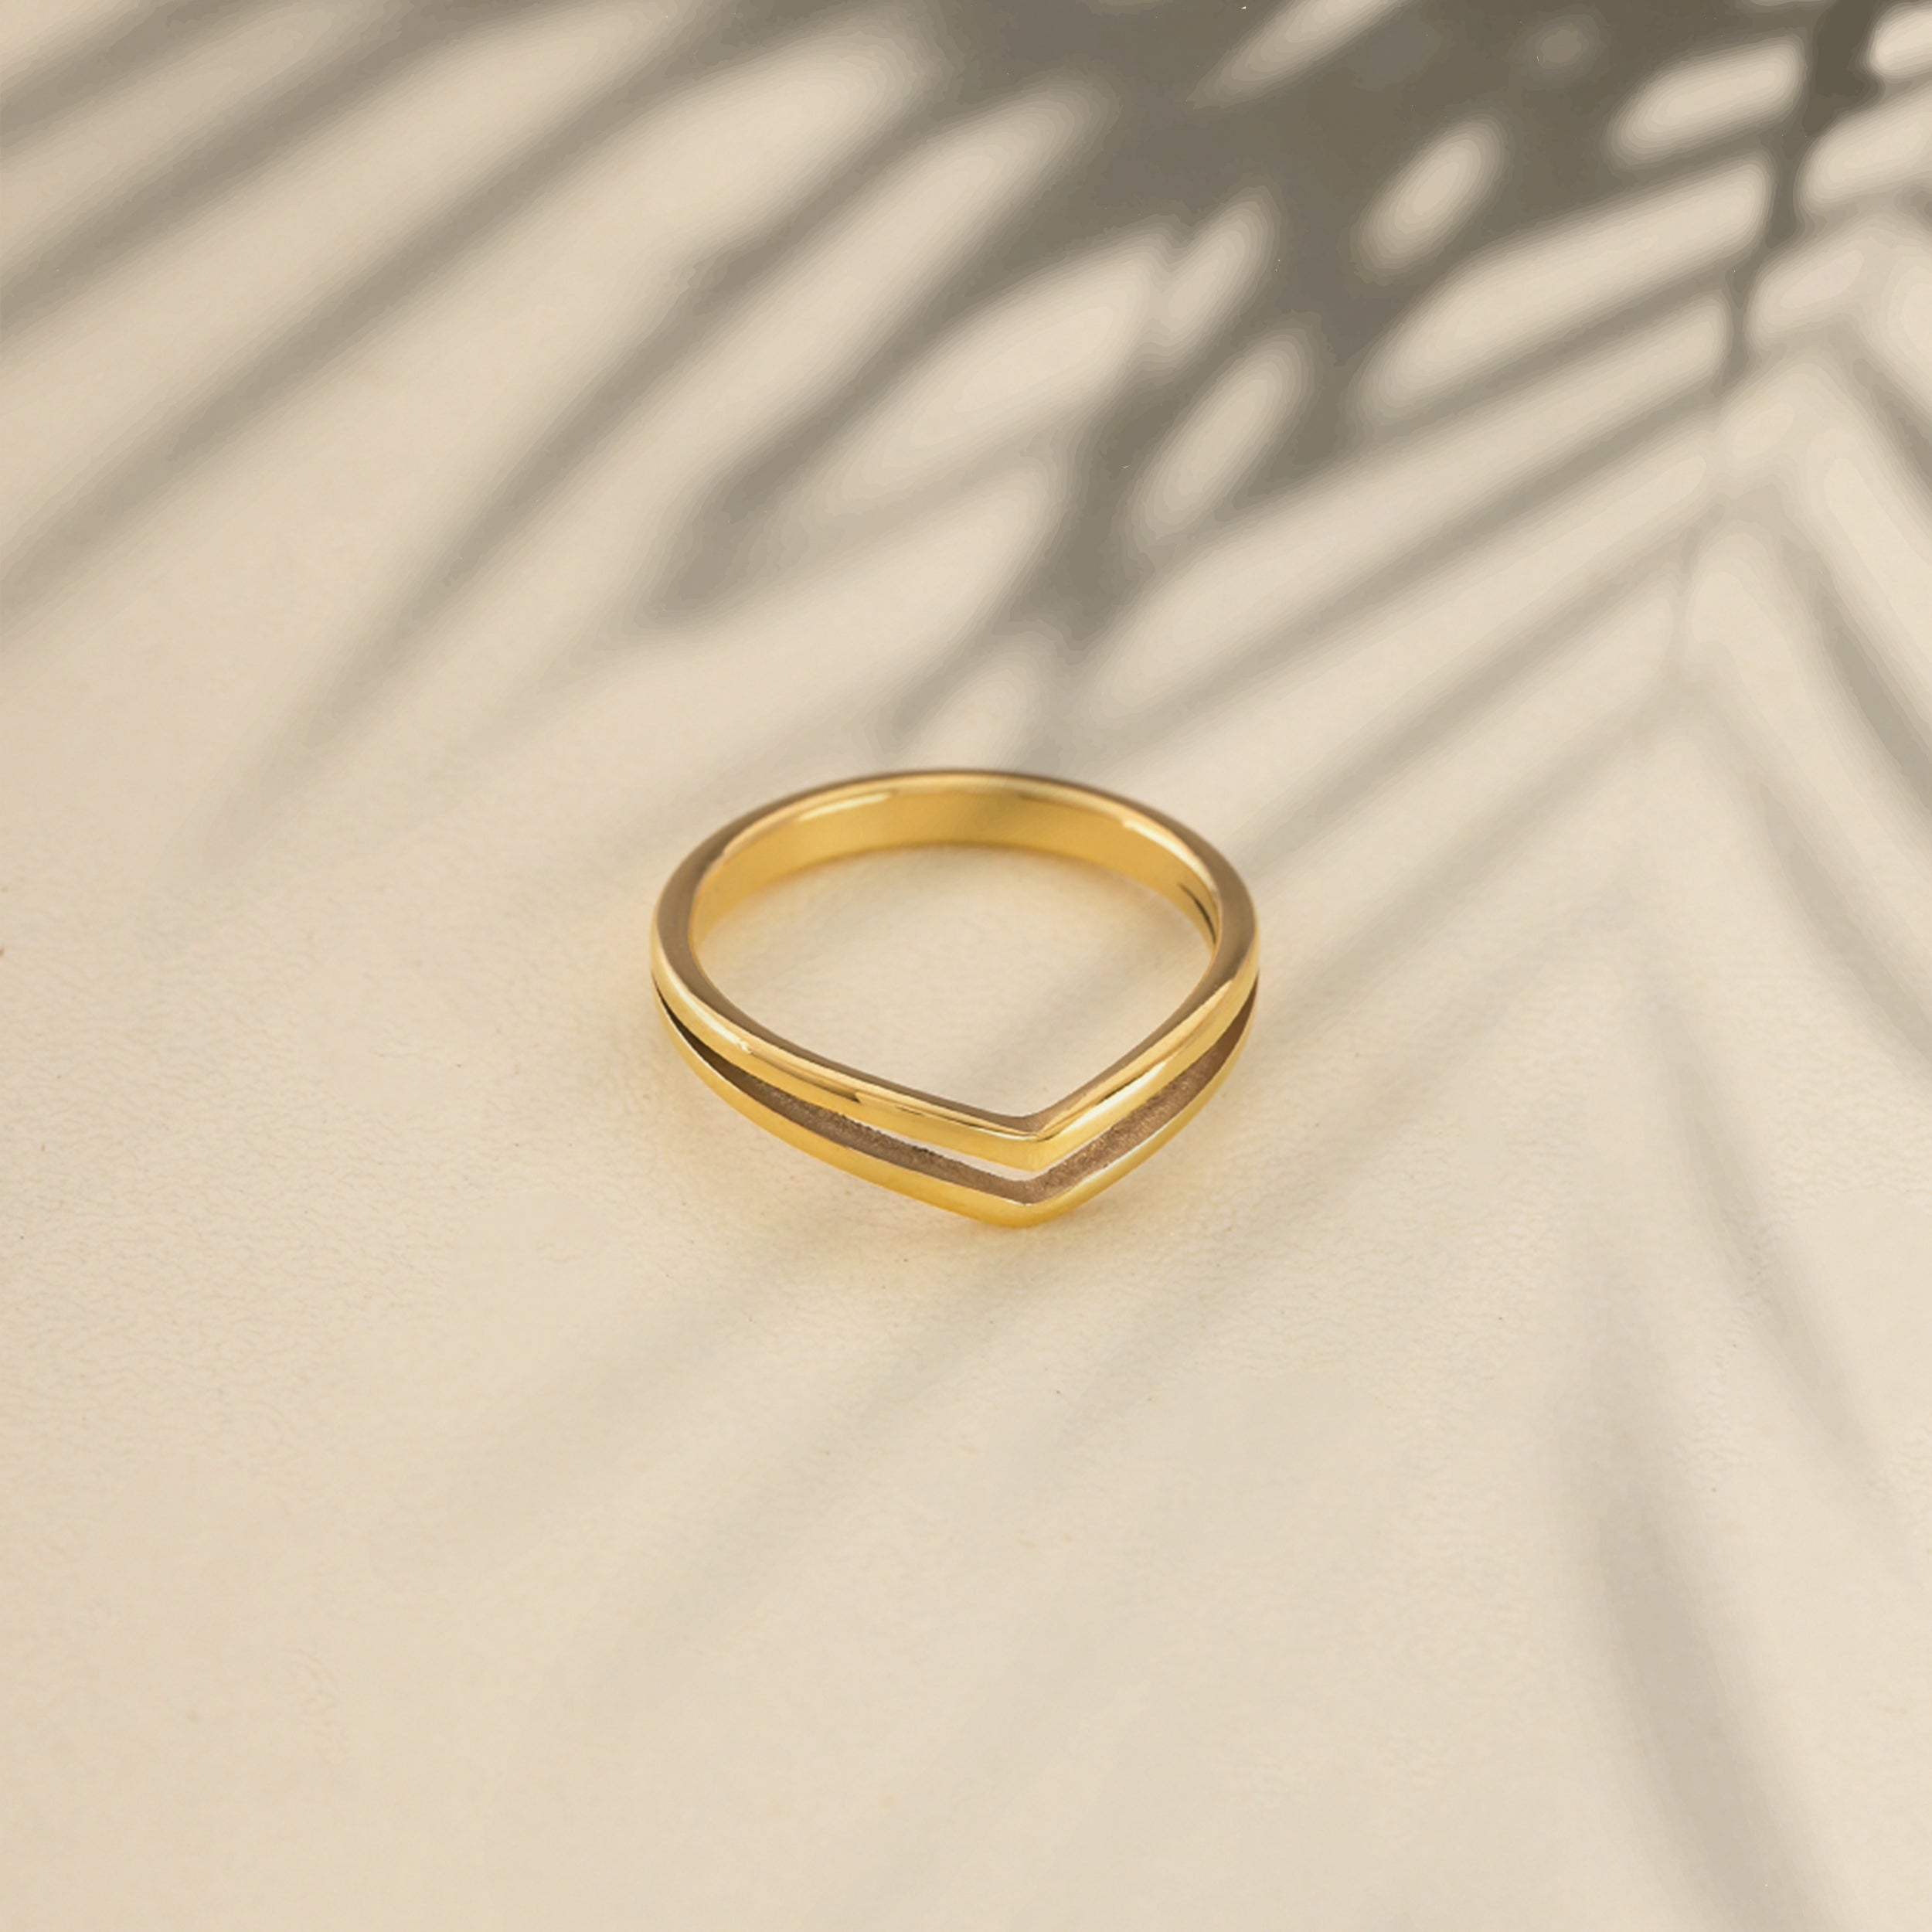 gold light weight vanki ring design // latest kalyanam rings designs //  prathanam rings in gold - YouTube